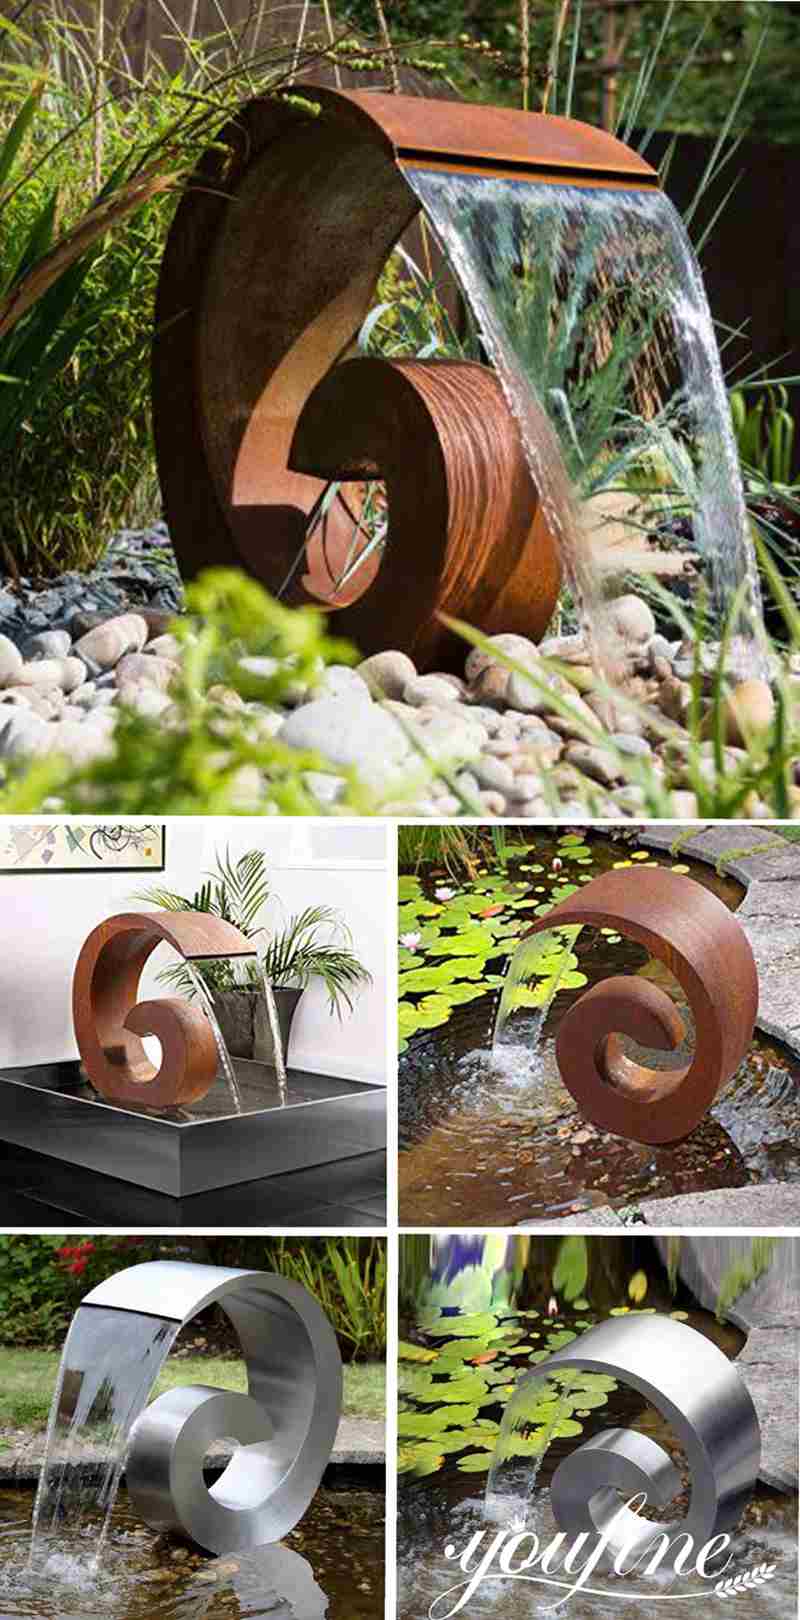 Decorative Garden Art Corten Steel Water Fountain for Sale CSS-313 - Center Square - 3